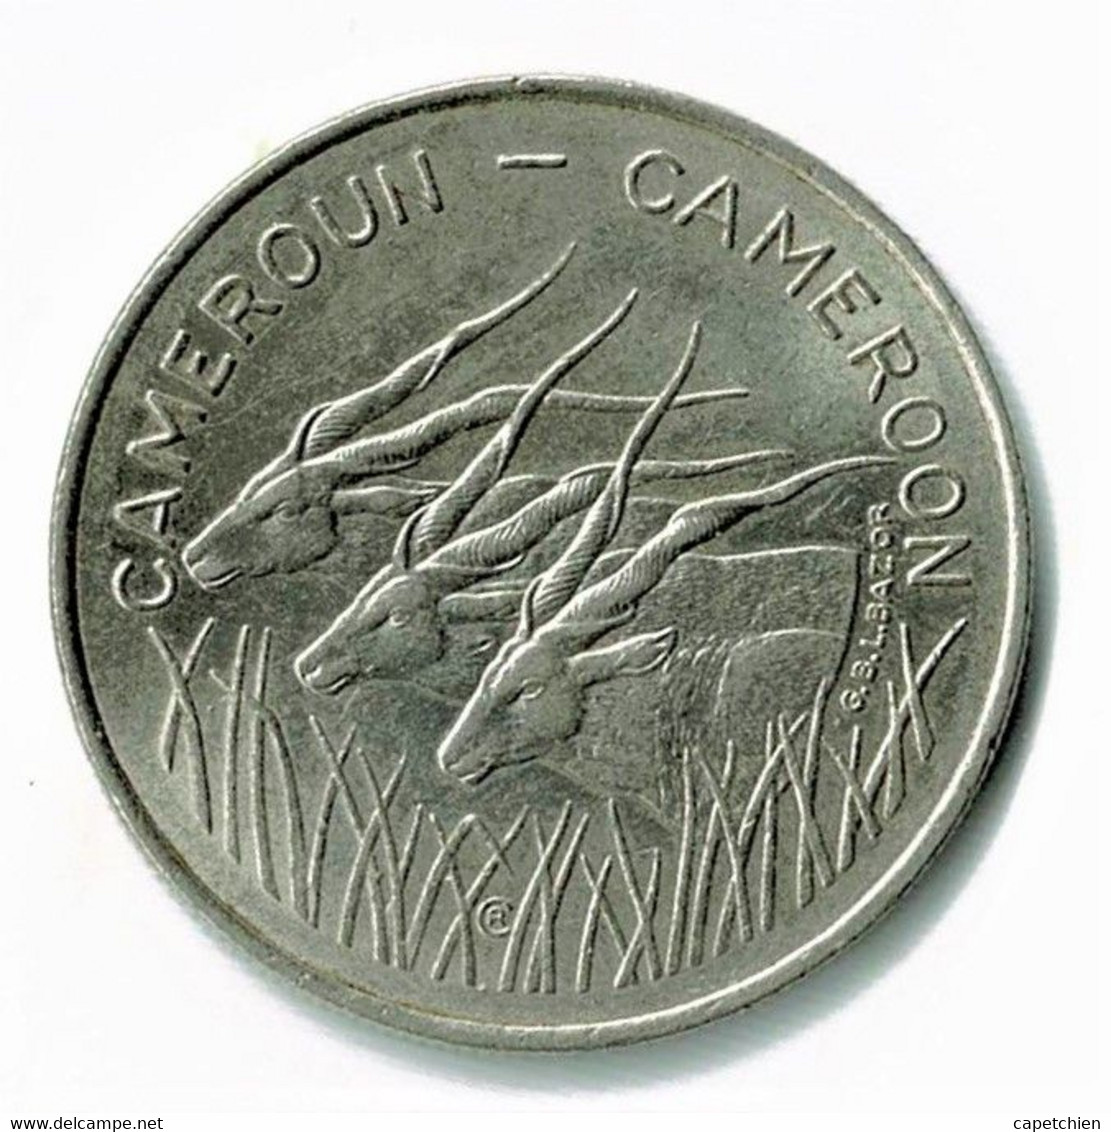 CAMEROUN / CAMEROON / BANQUE DE L'AFRIQUE CENTRALE / 100 FRANCS (CFA) 1975 / SUP - Cameroun